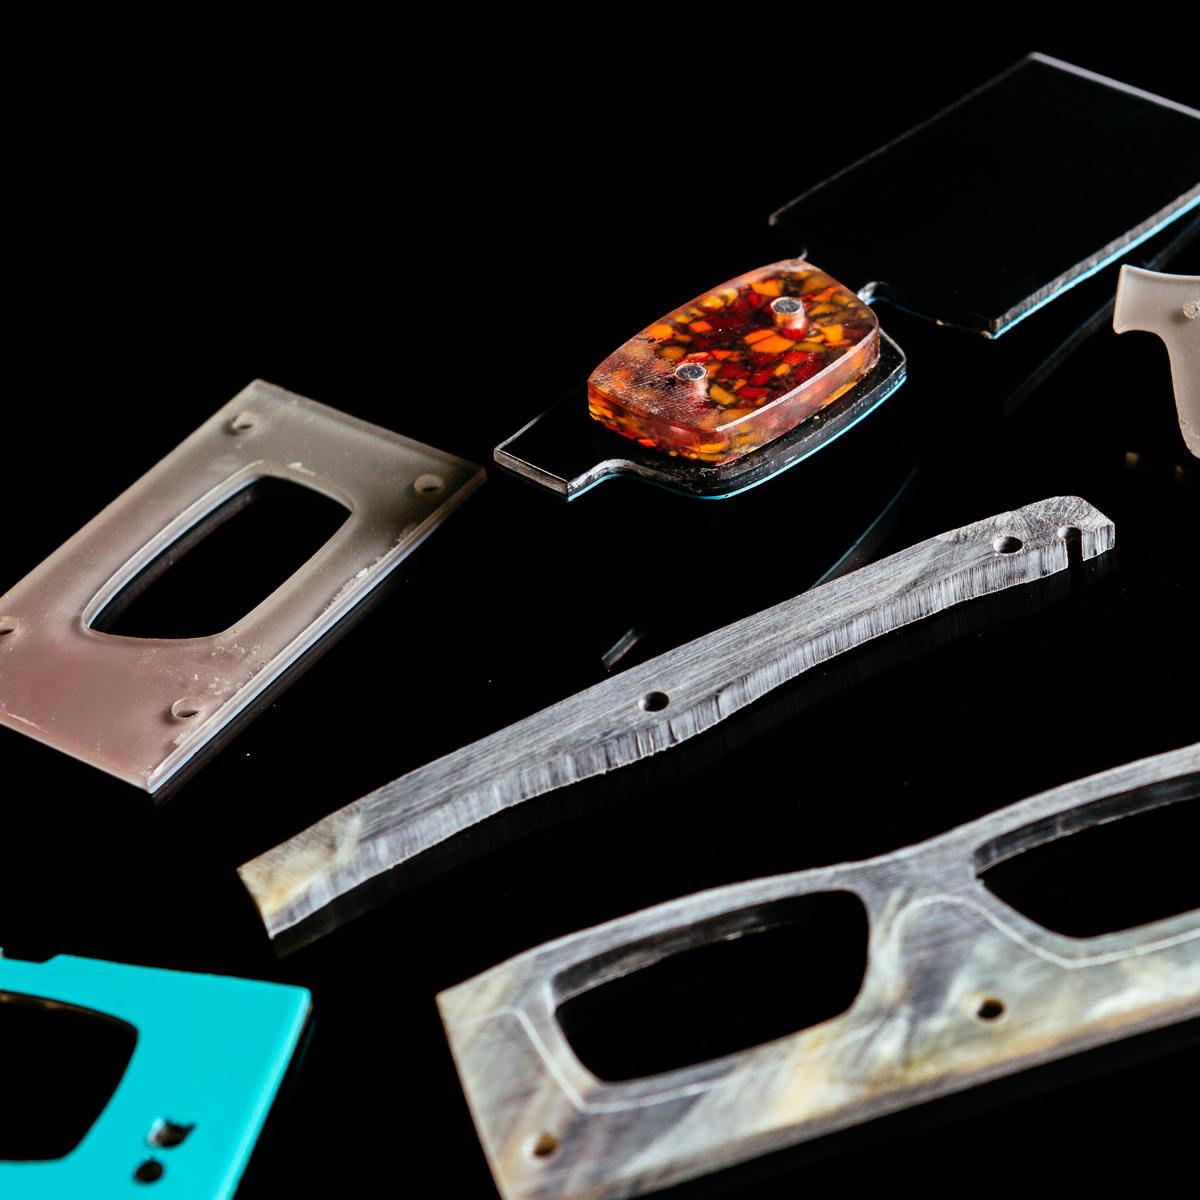 M05-1 : Making an eyewear frame using natural materials